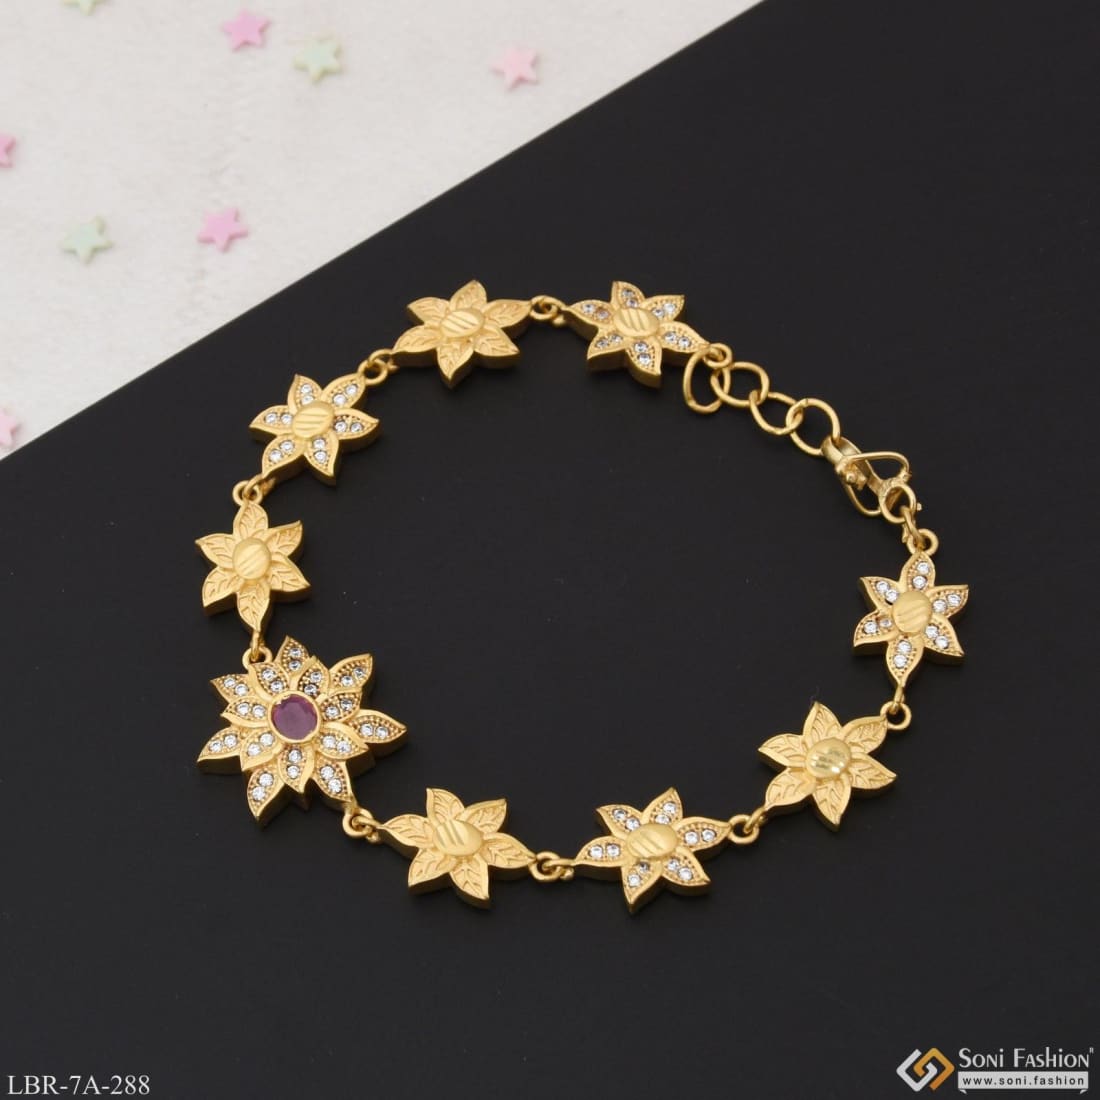 Amáli Jewelry Multi-Colored Diamond Textile Bracelet in 18k Gold